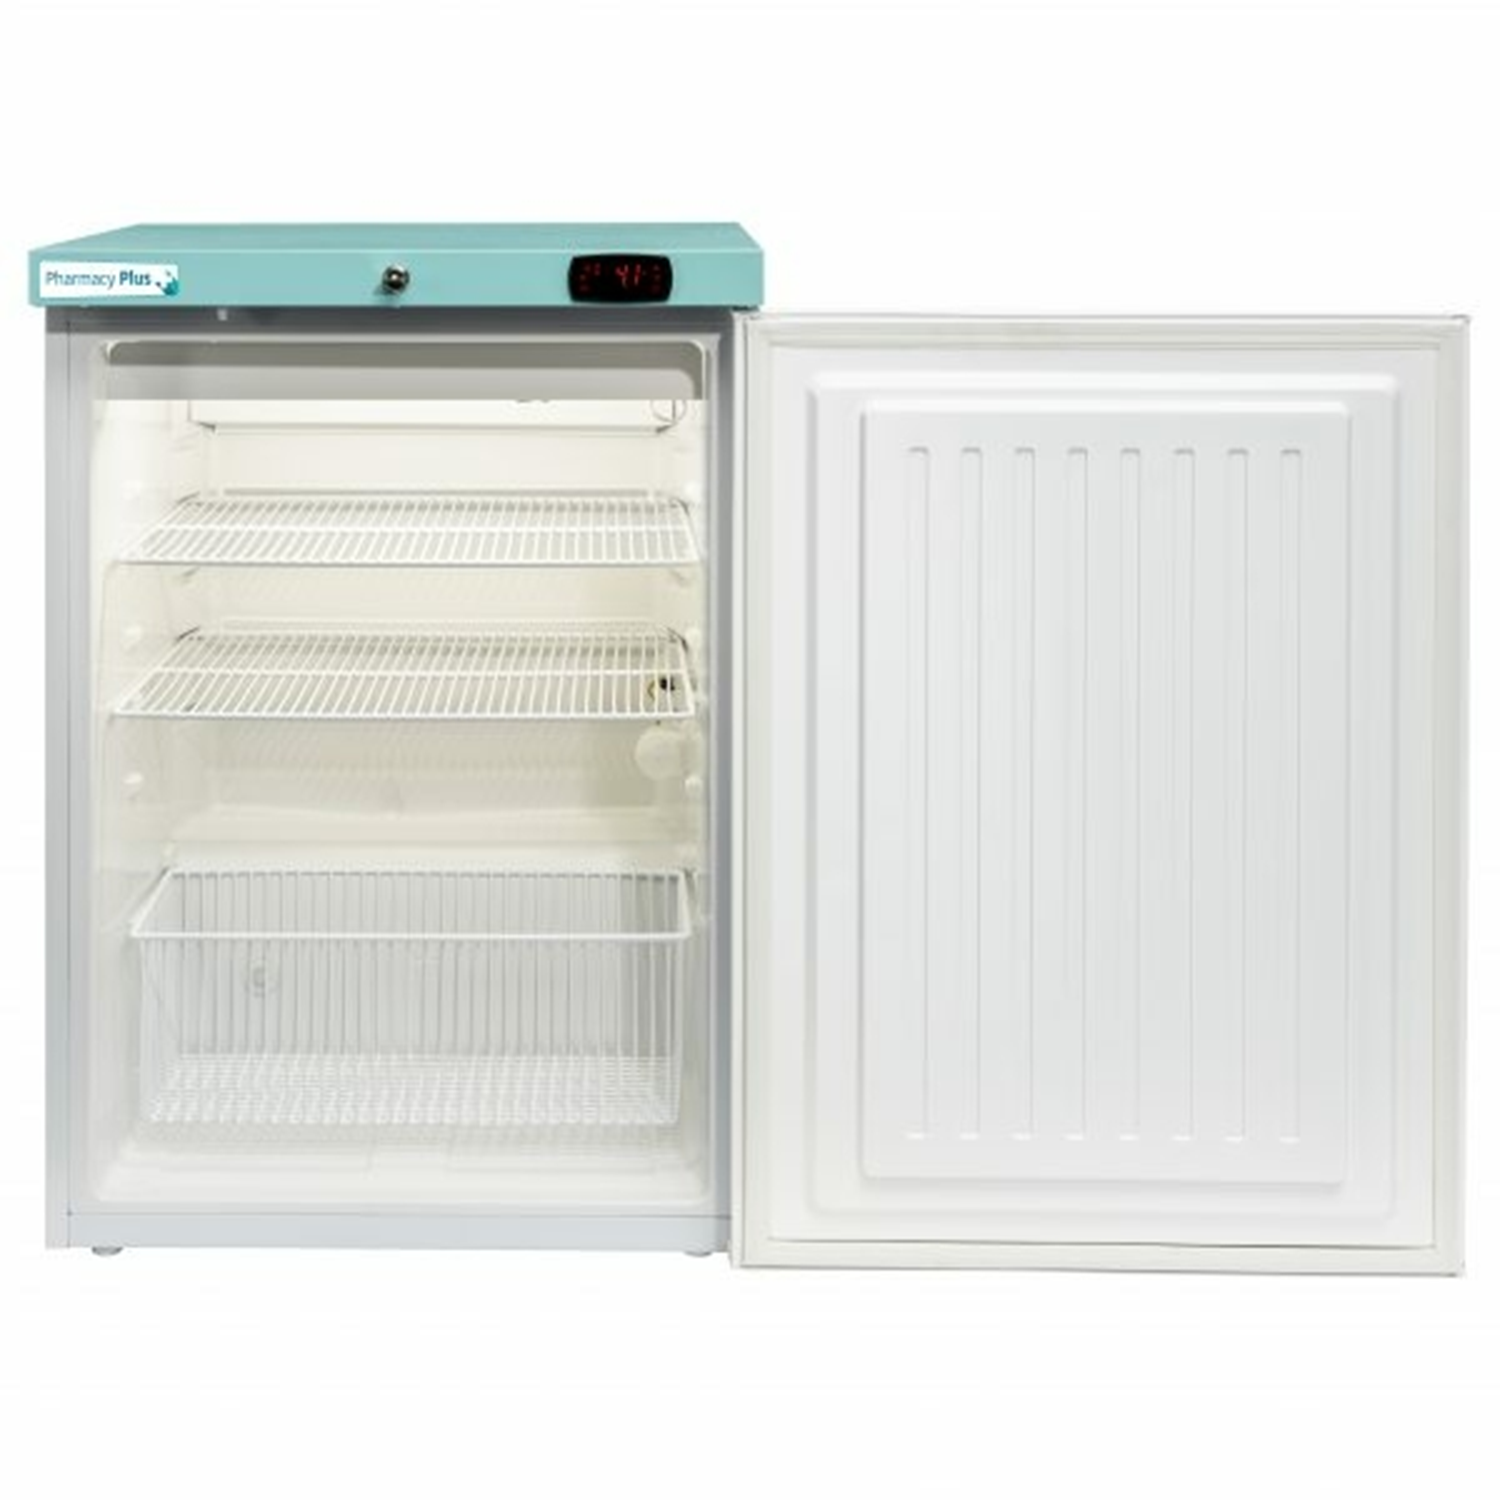 Lec Pharmacy Plus Countertop Refrigerator | 47L | Bluetooth Enabled | Solid Door (2)